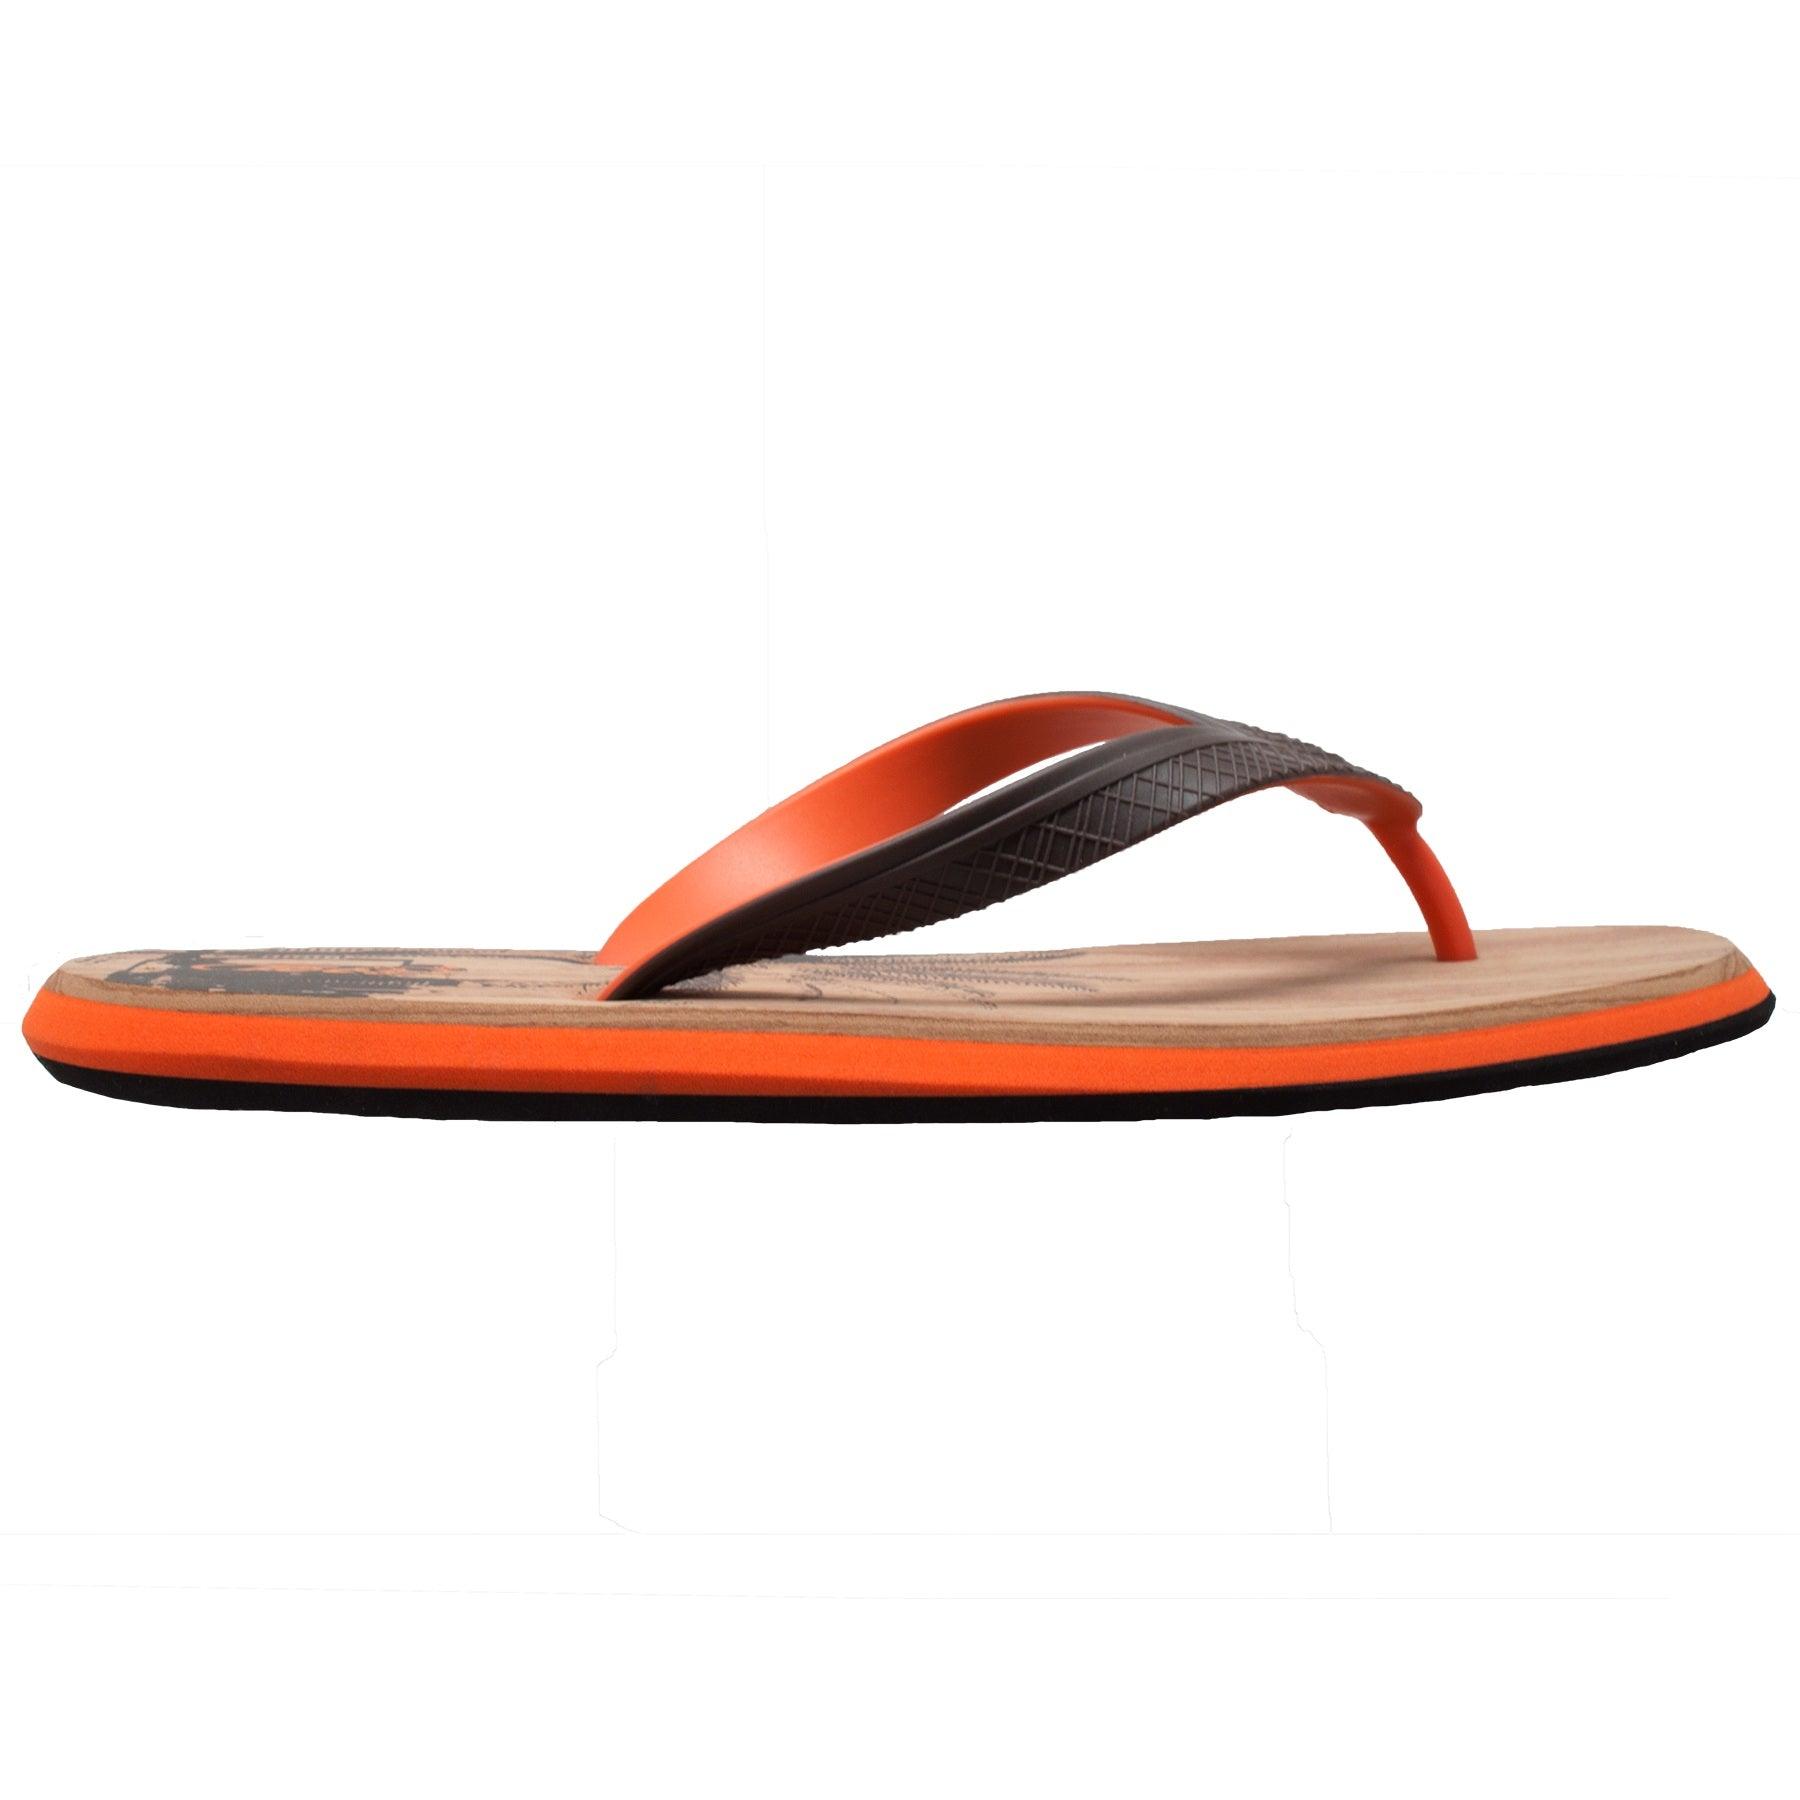 Shaboom Men's Dual Density Comfort Thong Sandal Brown/Orange - Flyclothing LLC